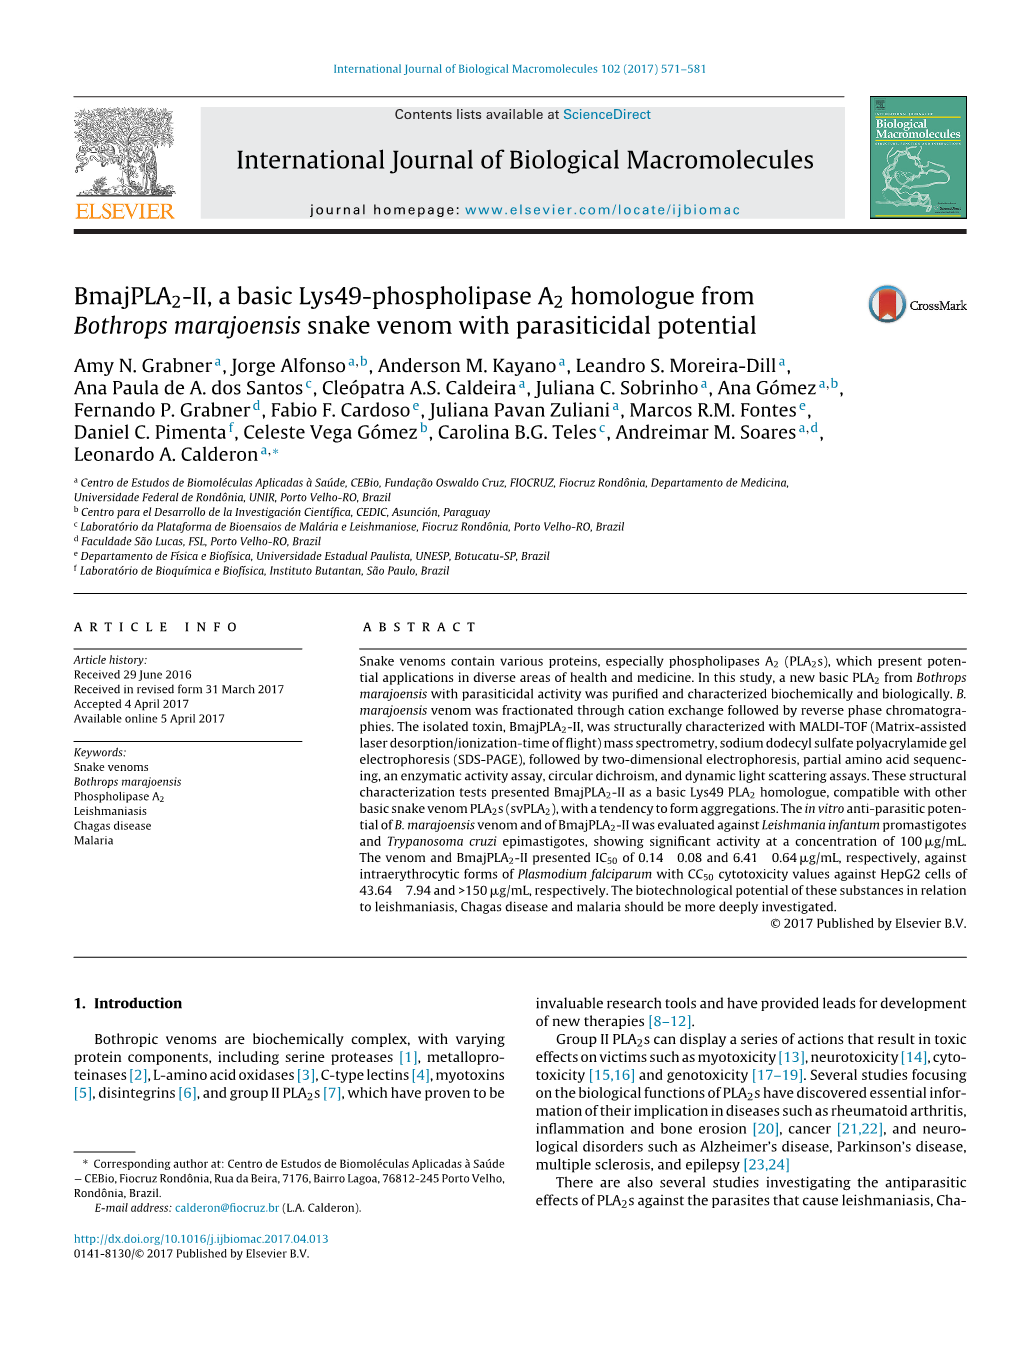 Bmajpla2-II, a Basic Lys49-Phospholipase A2 Homologue from Bothrops Marajoensis Snake Venom with Parasiticidal Potential